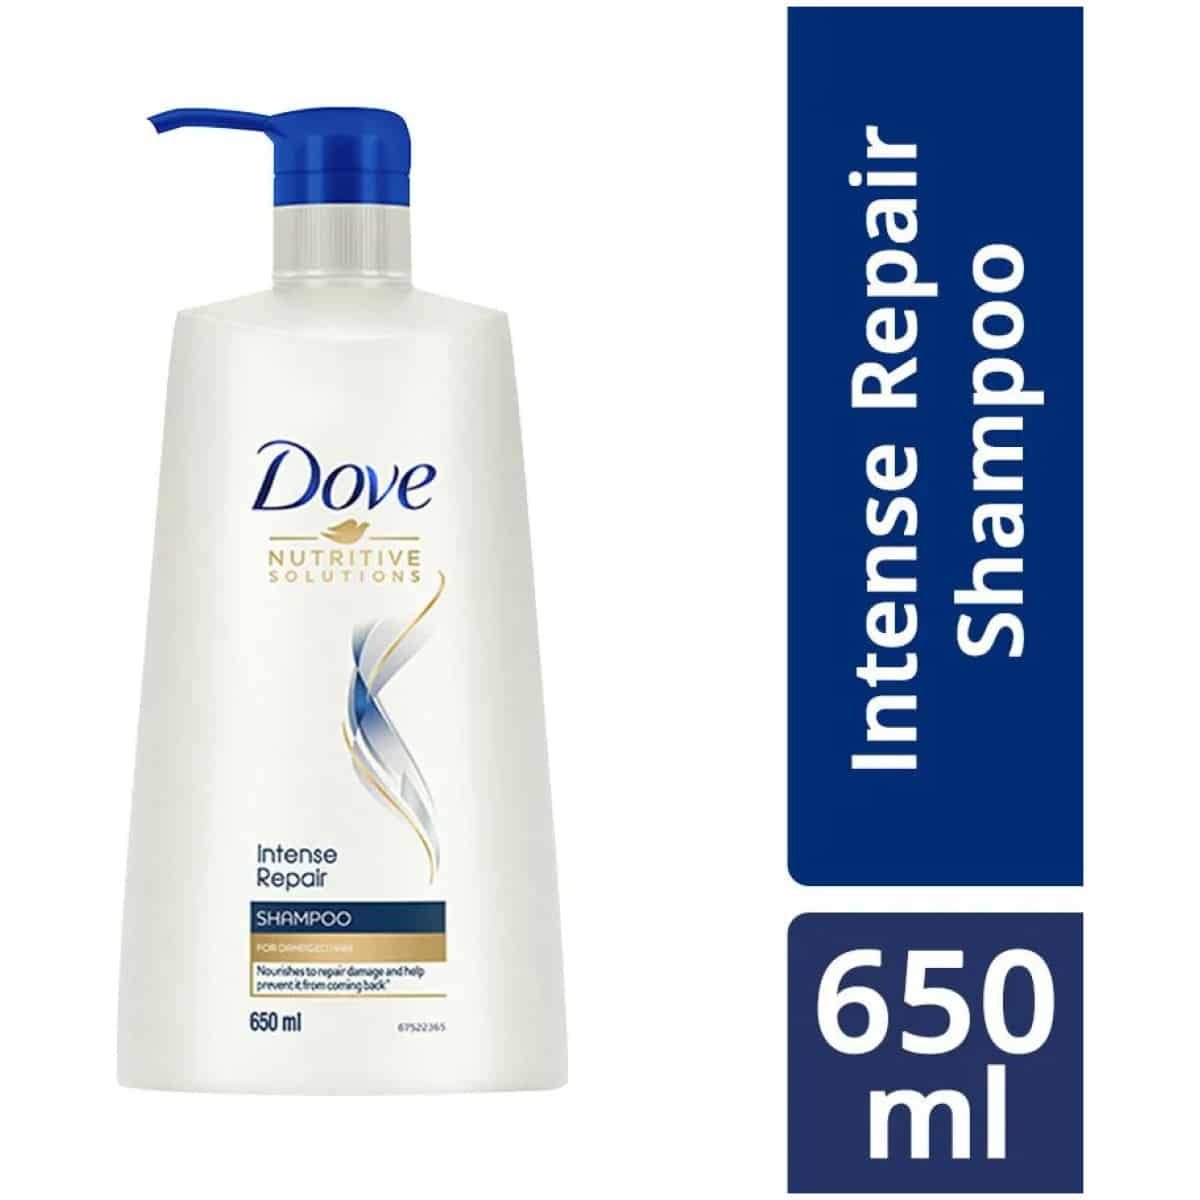 Dove Nutritive Solution Intense Repair Shampoo 650ml